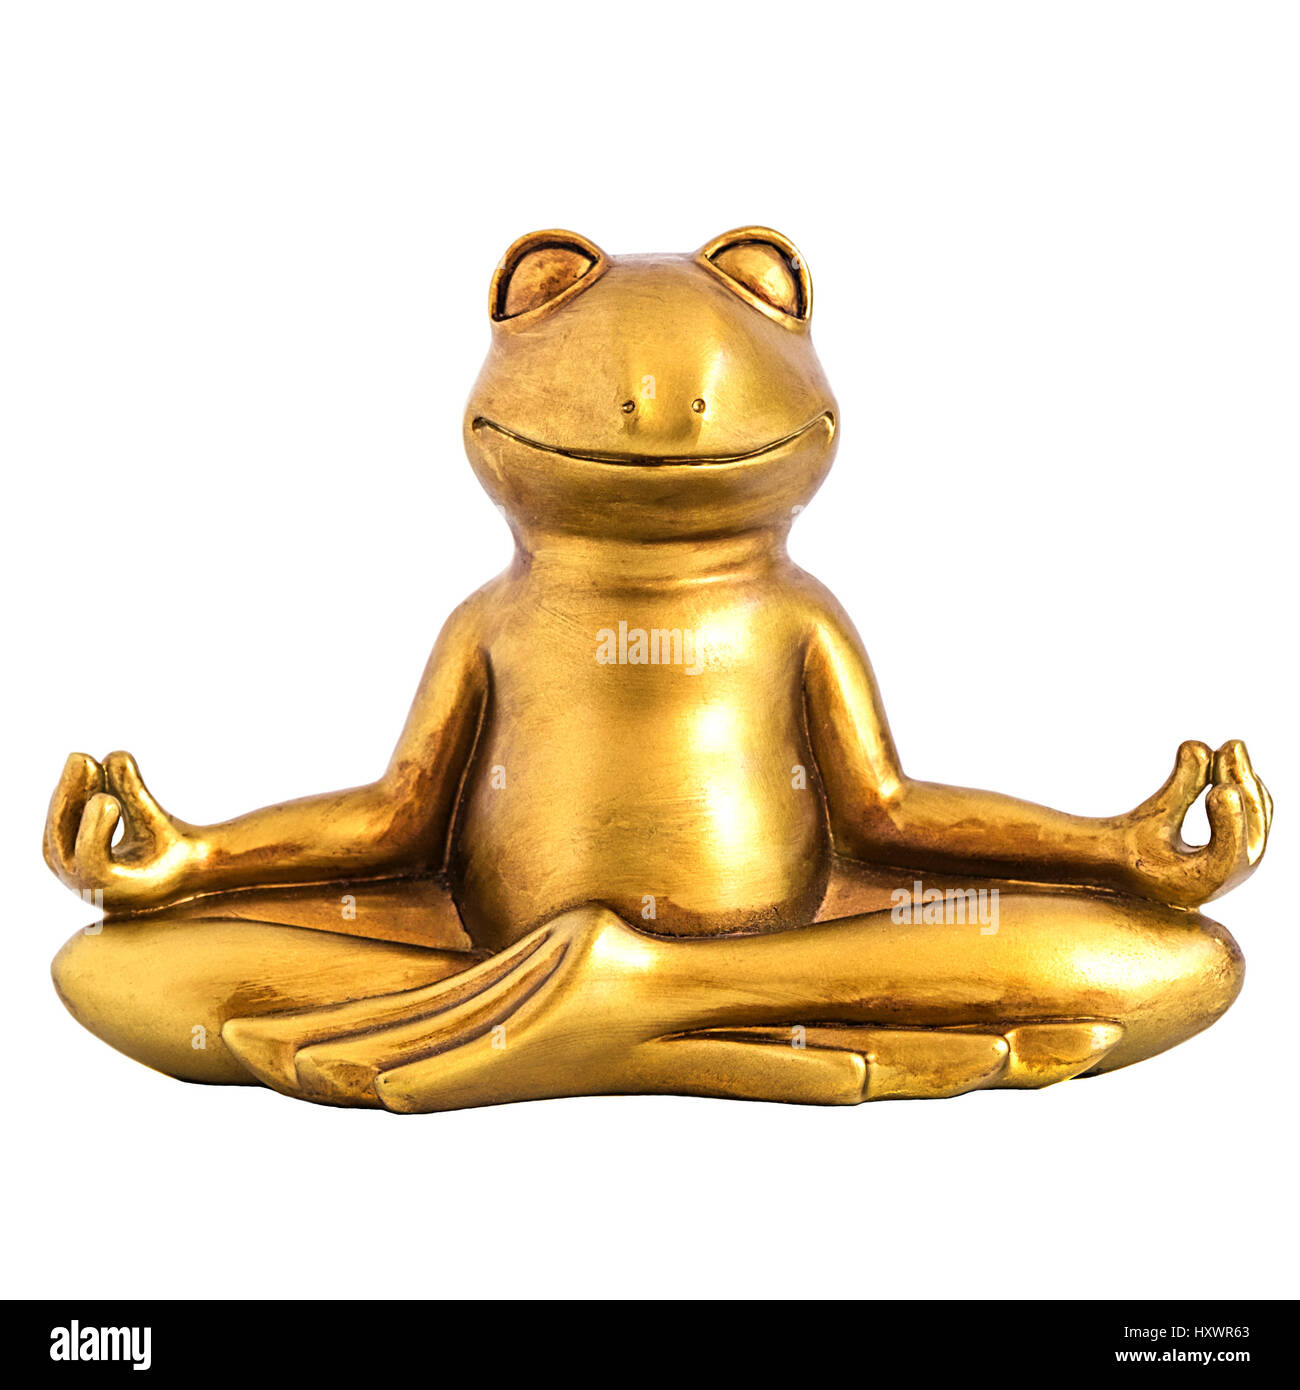 https://c8.alamy.com/comp/HXWR63/smiling-gold-yoga-frog-meditating-in-lotus-pose-body-mind-and-soul-HXWR63.jpg